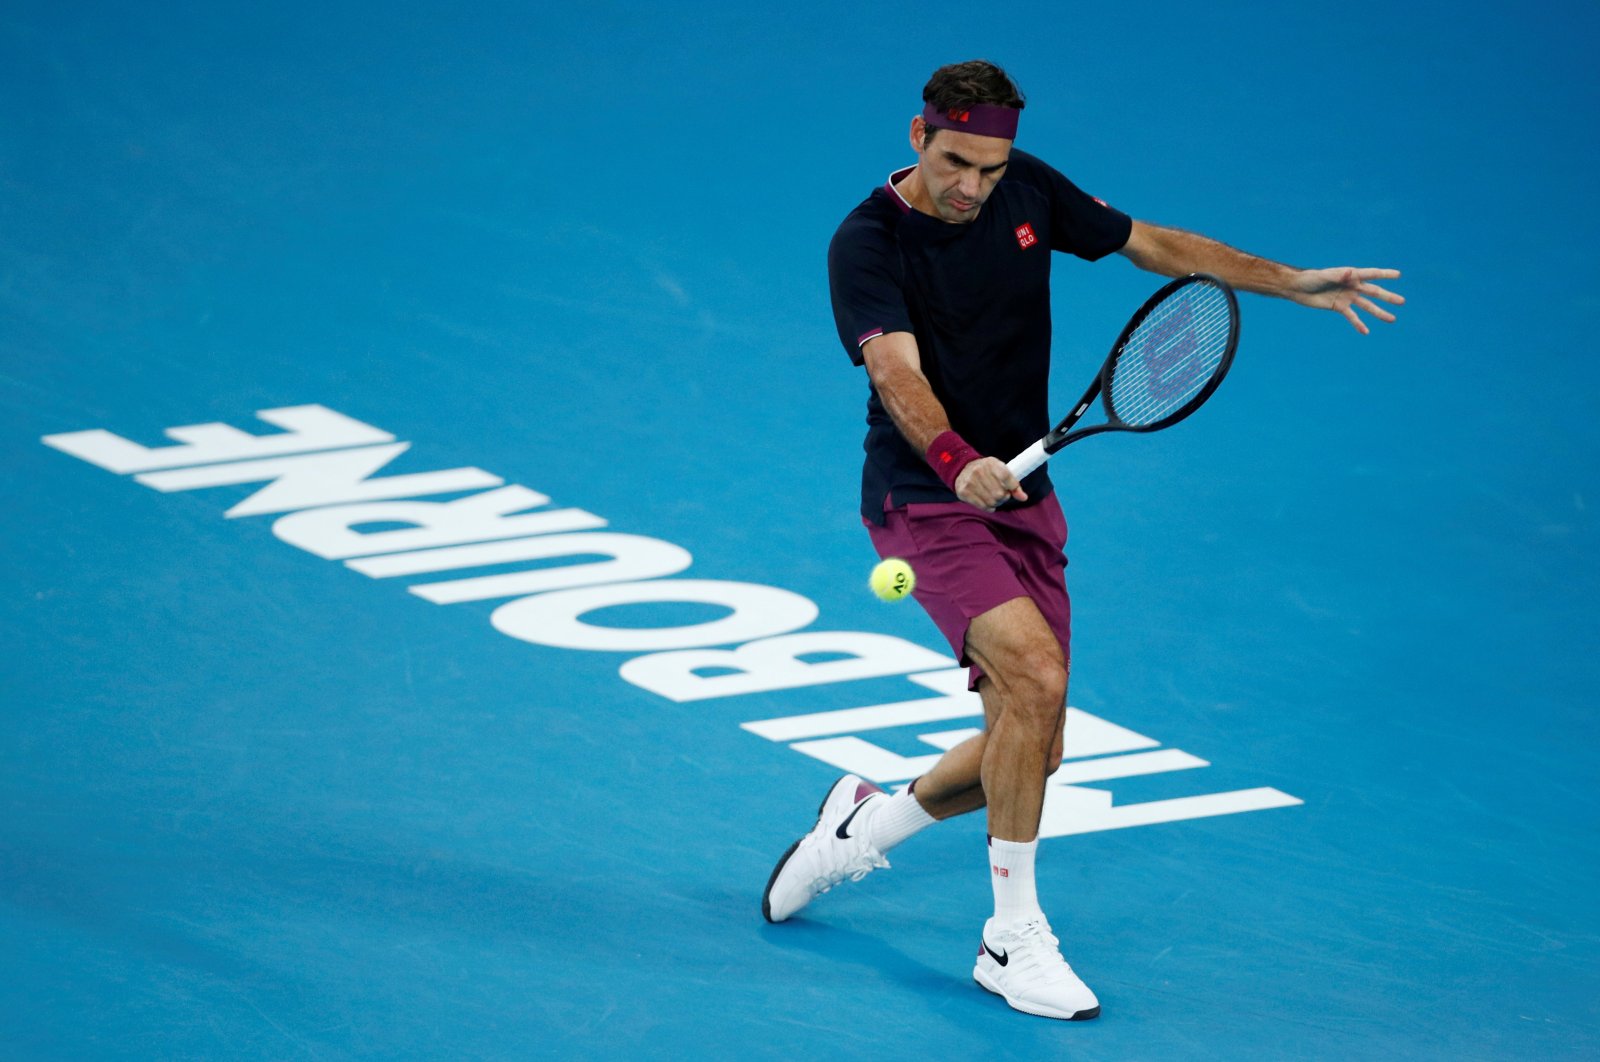 Roger Federer in action during an Australian Open semifinal match against Novak Djokovic, in Melbourne, Australia, Jan. 30, 2020. (Reuters Photo)